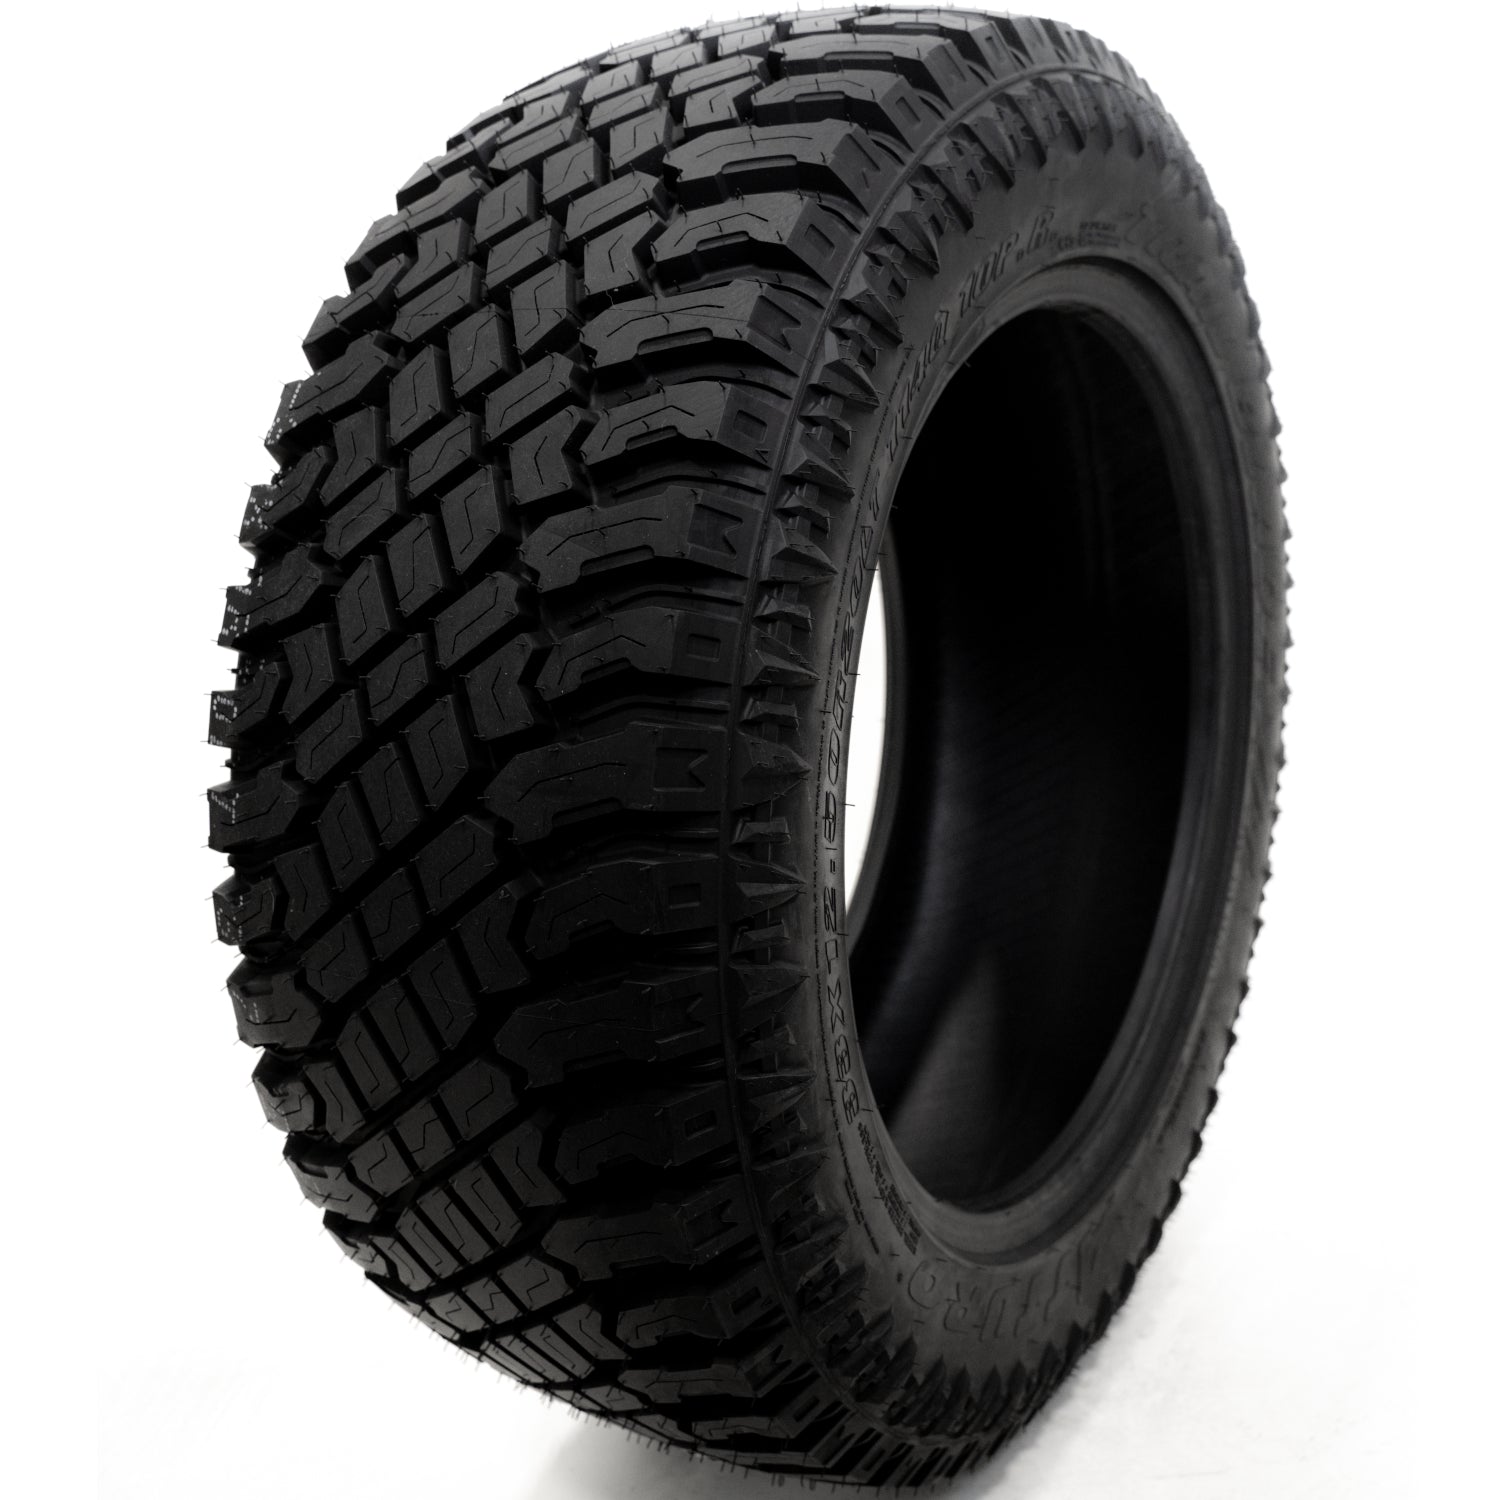 ATTURO TRAIL BLADE XT 275/55R20 XL (31.9X10.8R 20) Tires